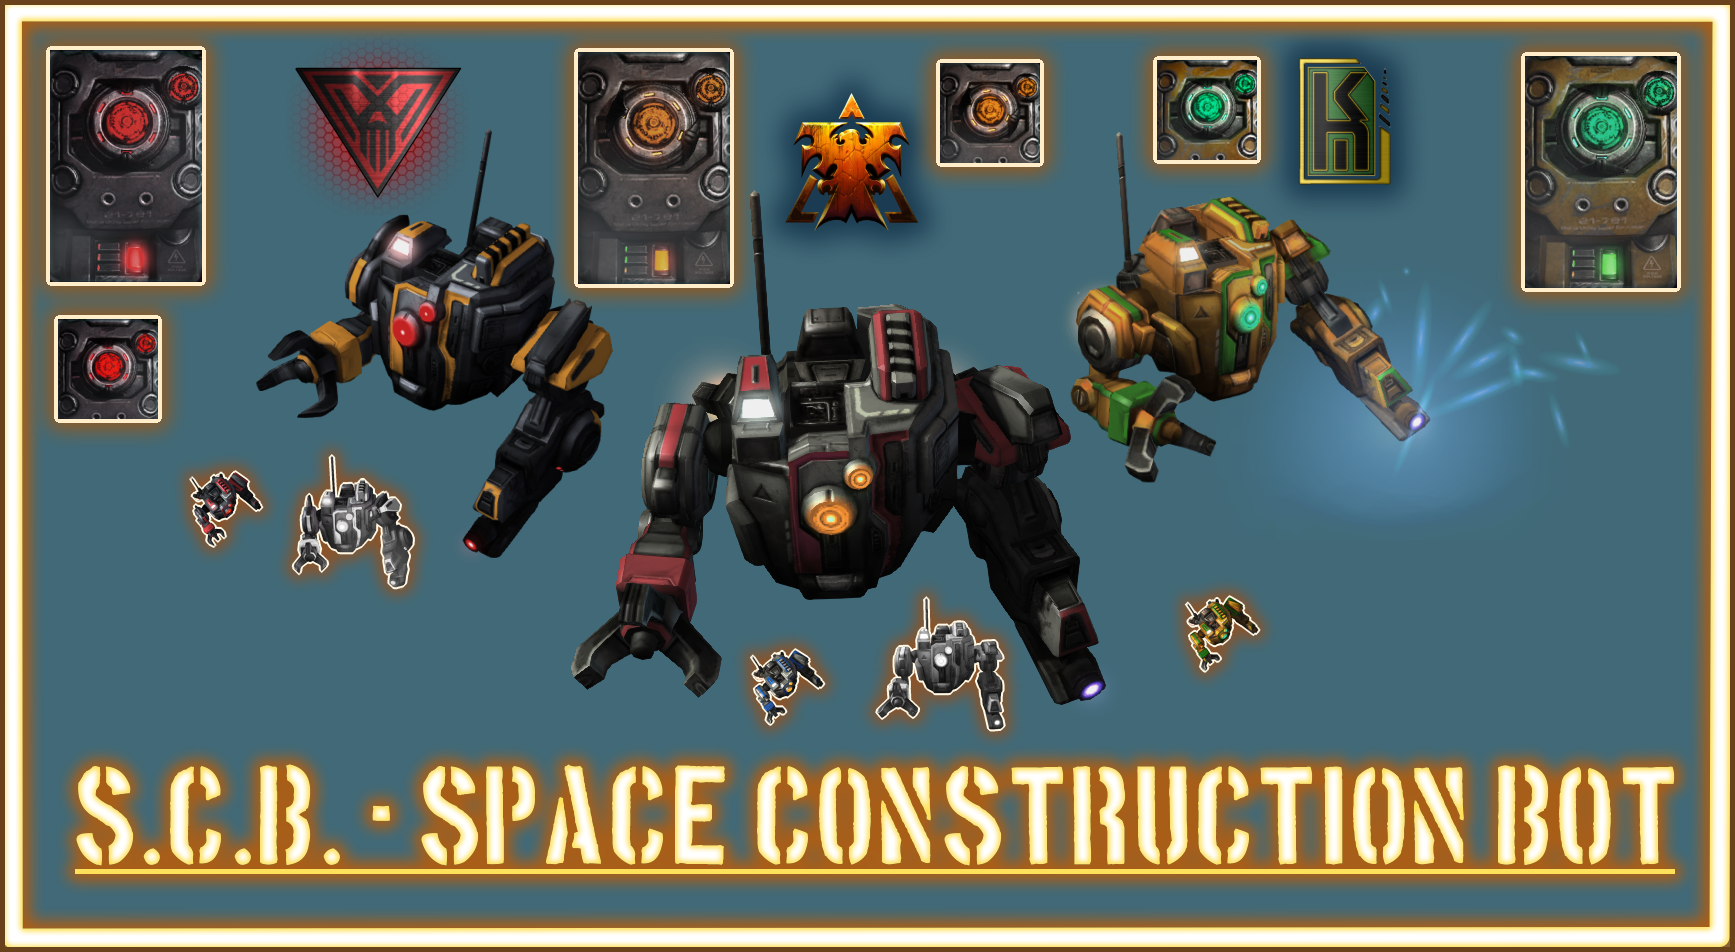 S.C.B. - Space Construction Bot